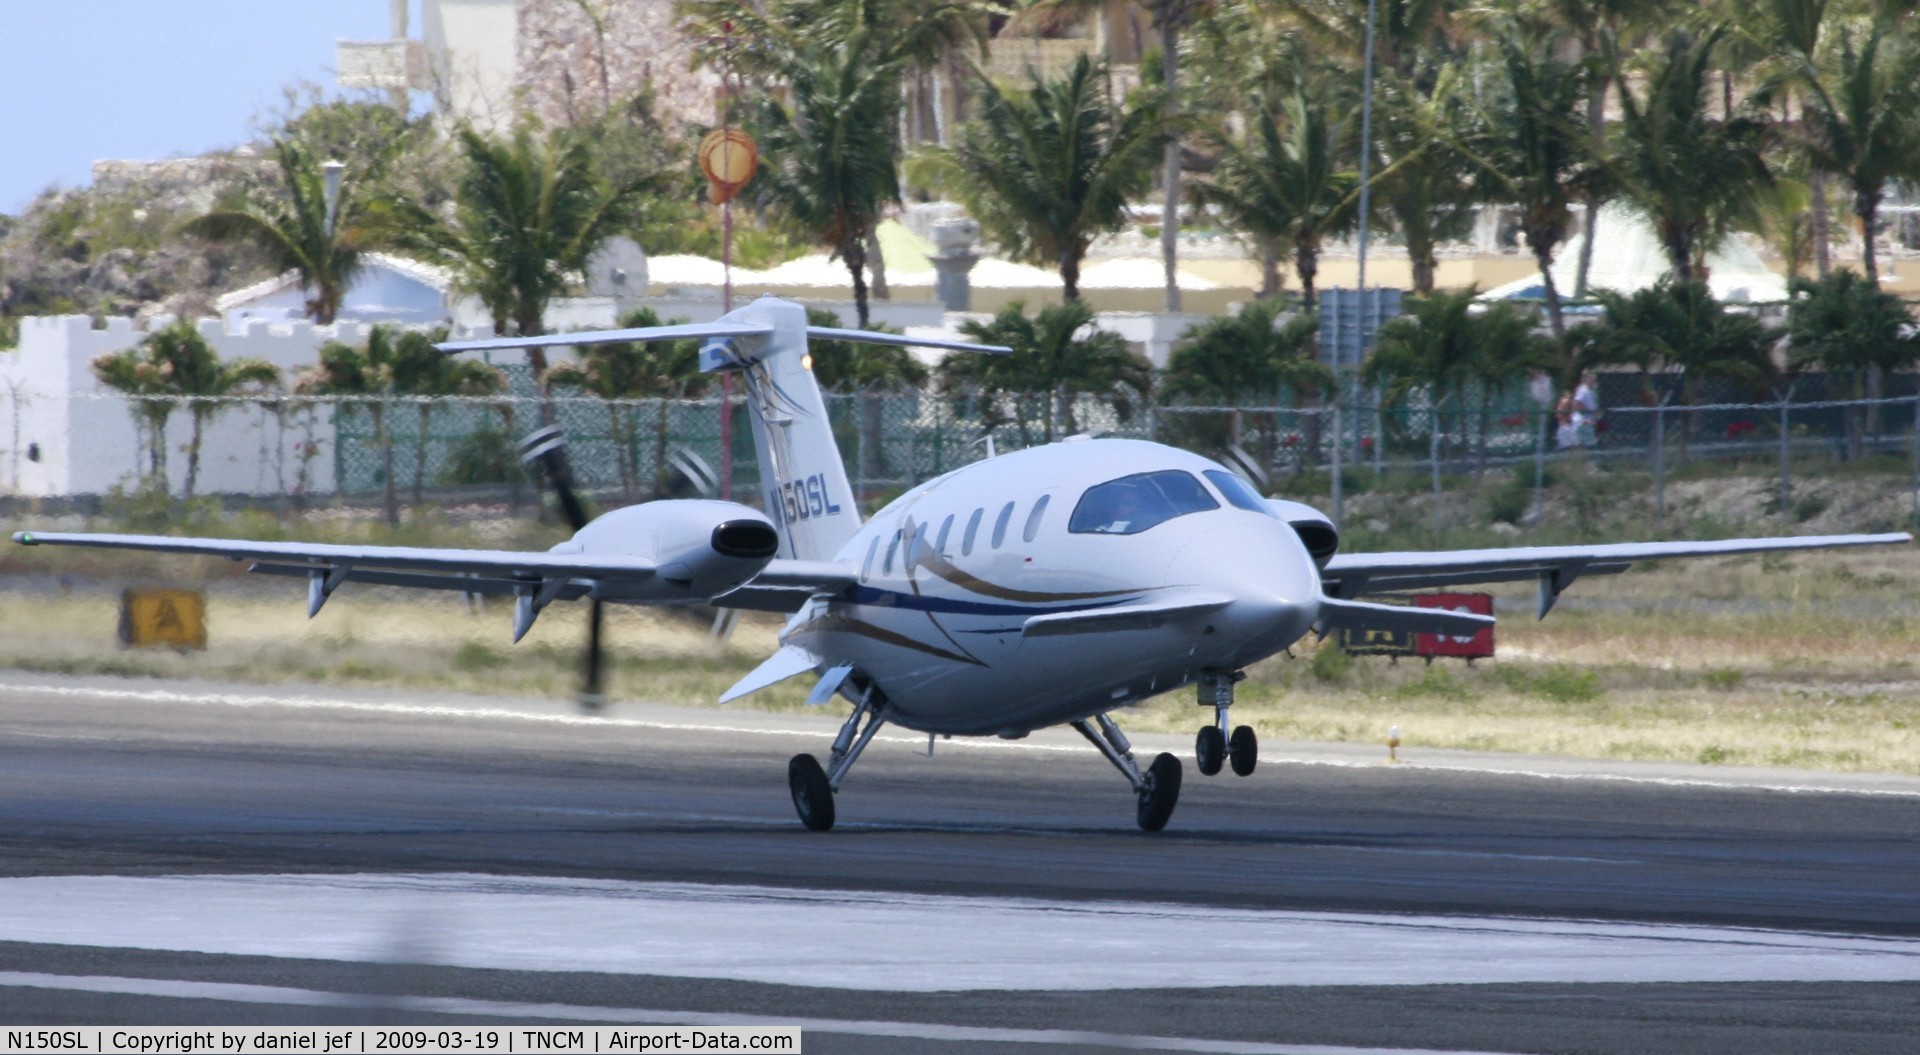 N150SL, 2005 Piaggio P-180 Avanti C/N 1111, landing rn 10